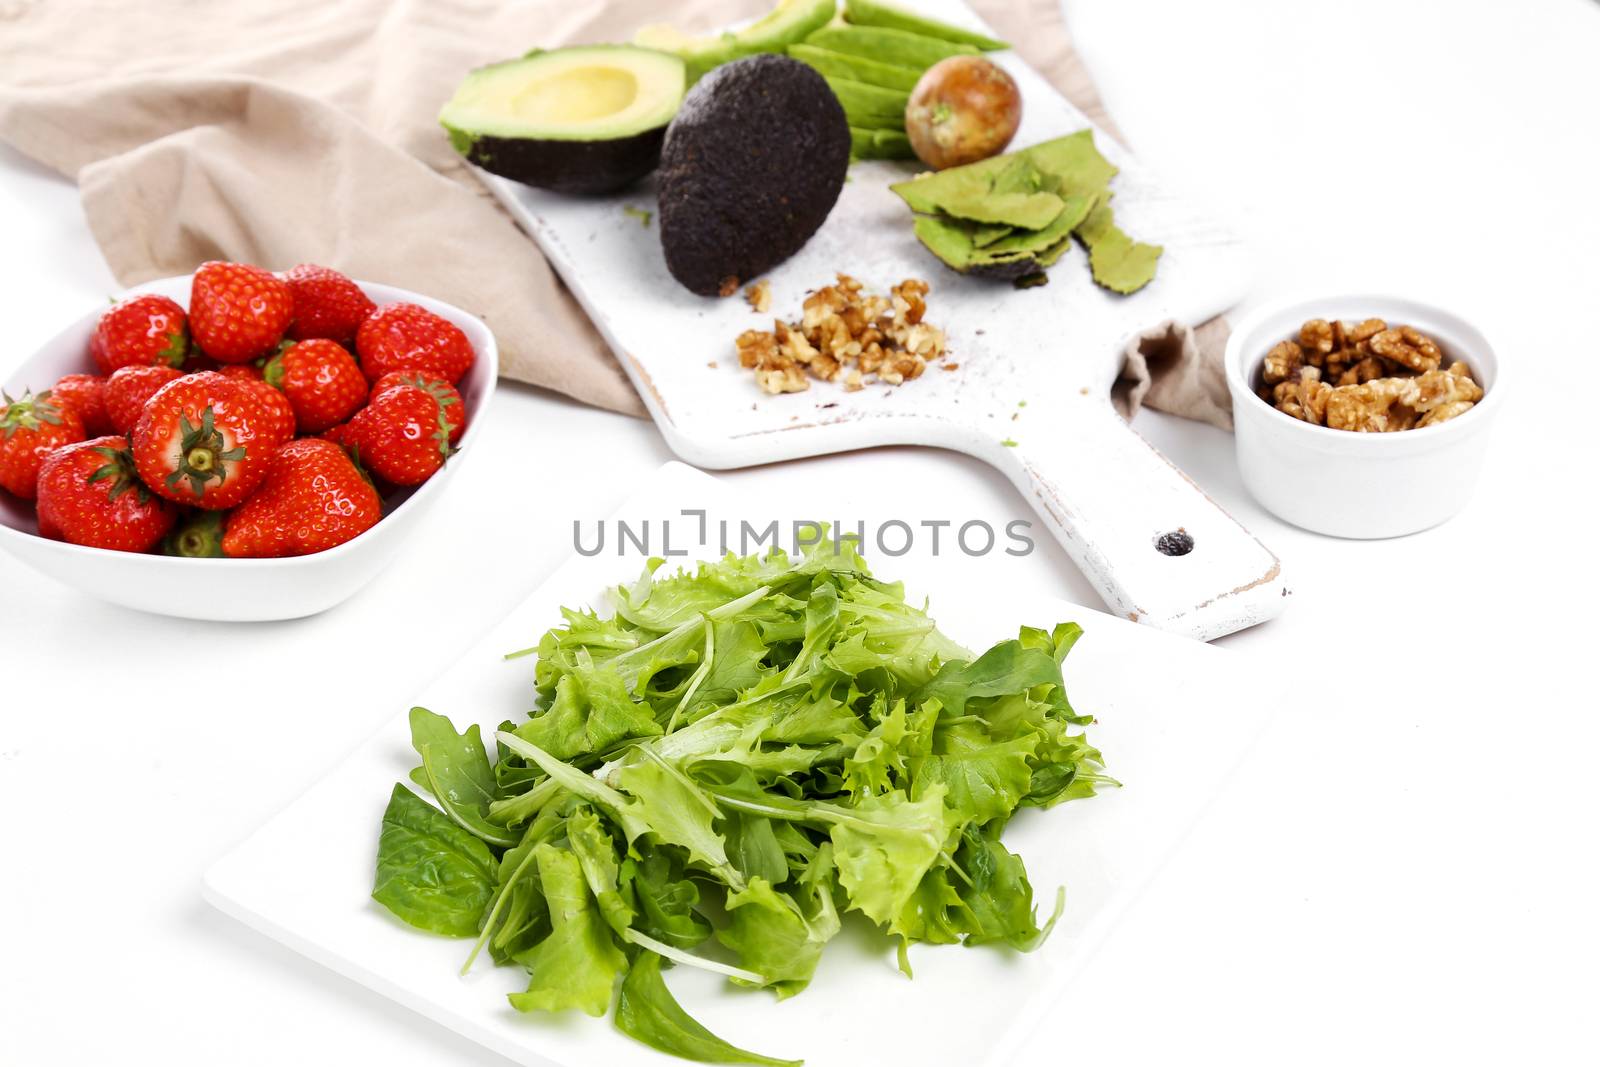 Delicious salad by rufatjumali